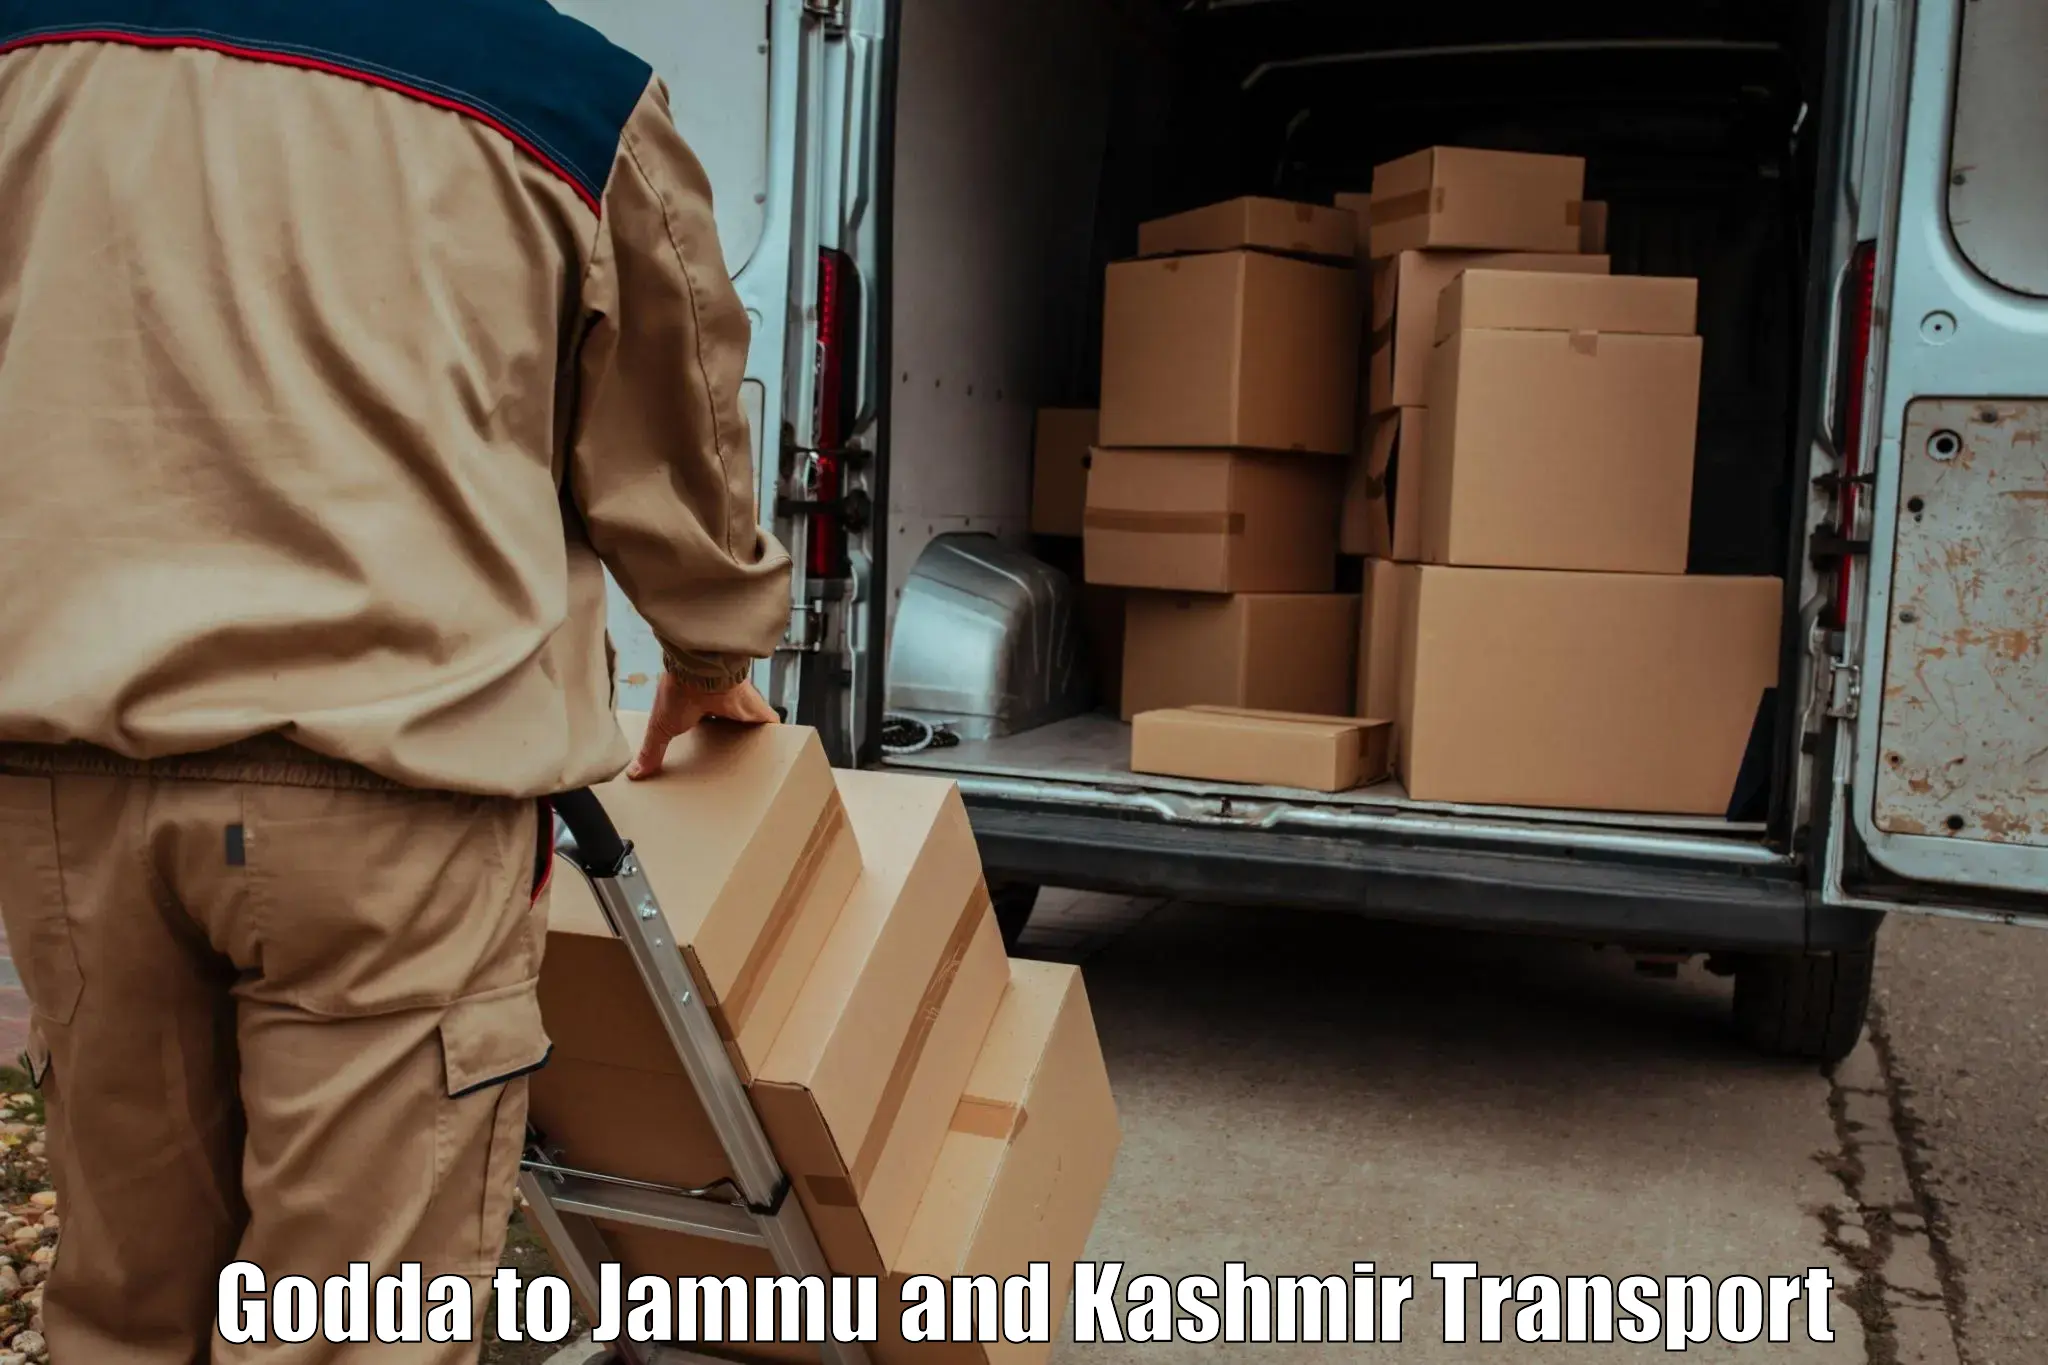 Goods delivery service Godda to Leh